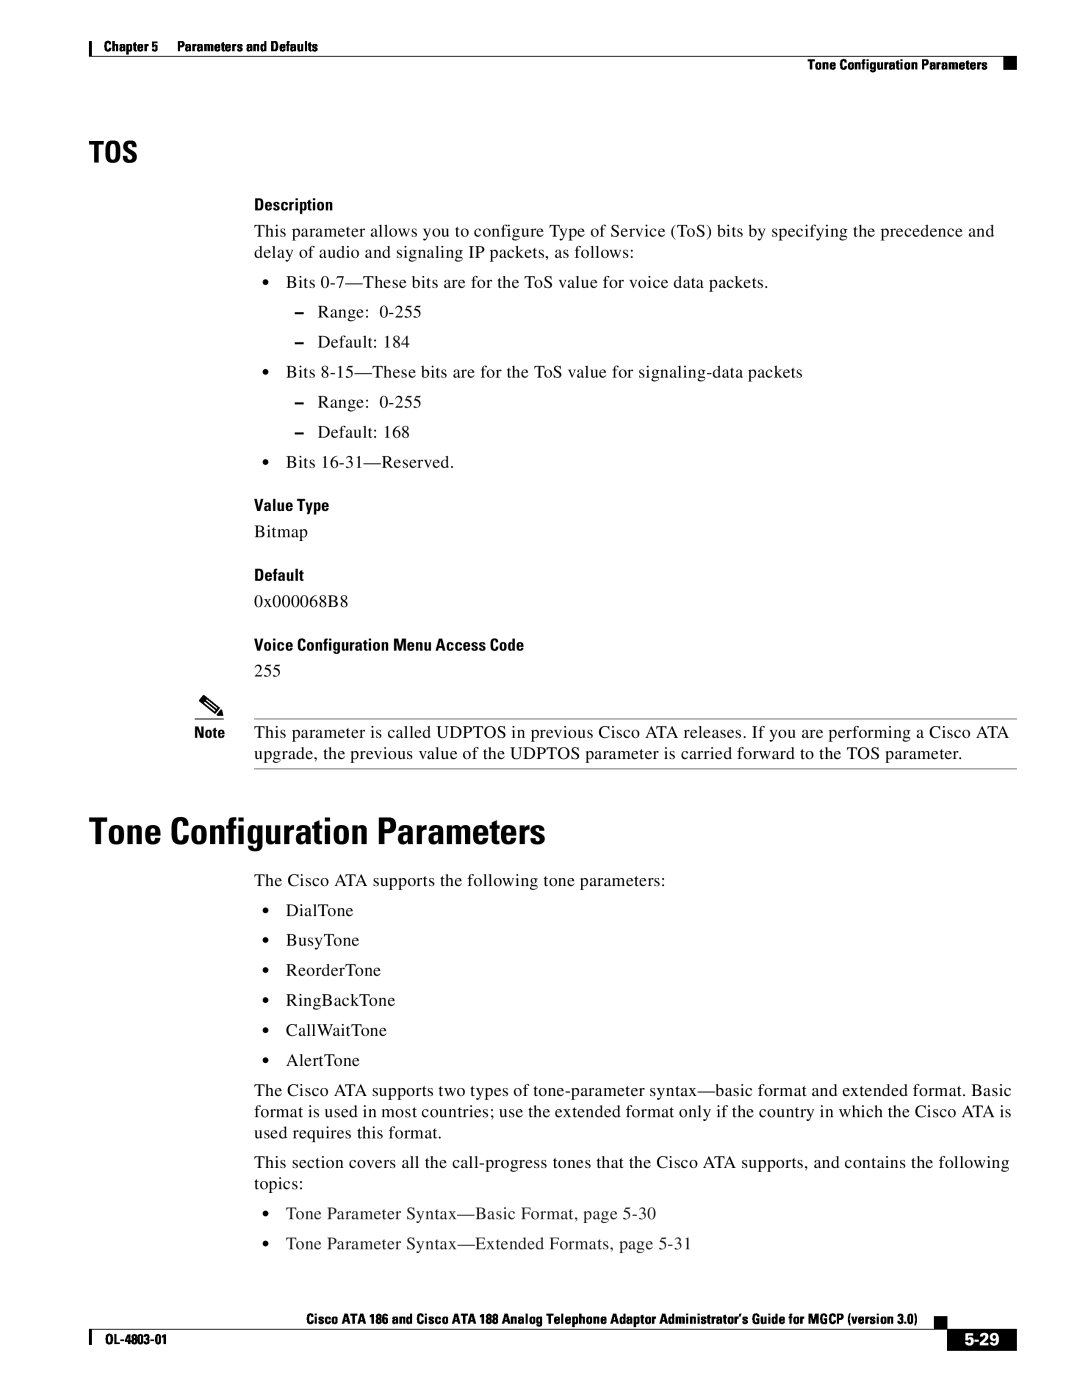 Cisco Systems ATA 188 Tone Configuration Parameters, Tone Parameter Syntax-Basic Format, page, 5-29, Description, Default 